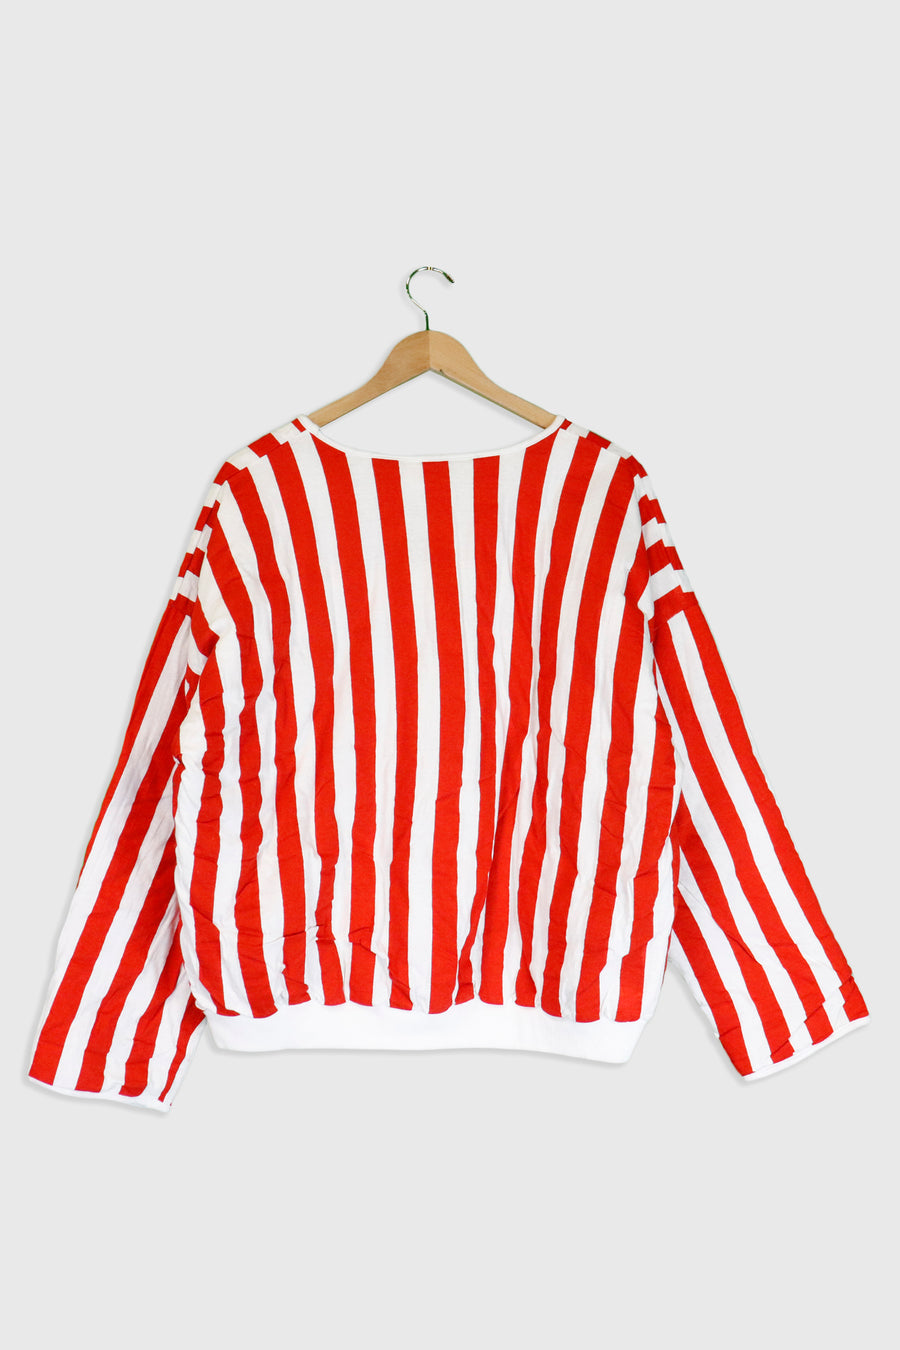 Vintage Eithen On Striped Panda Sweatshirt Sz O/S